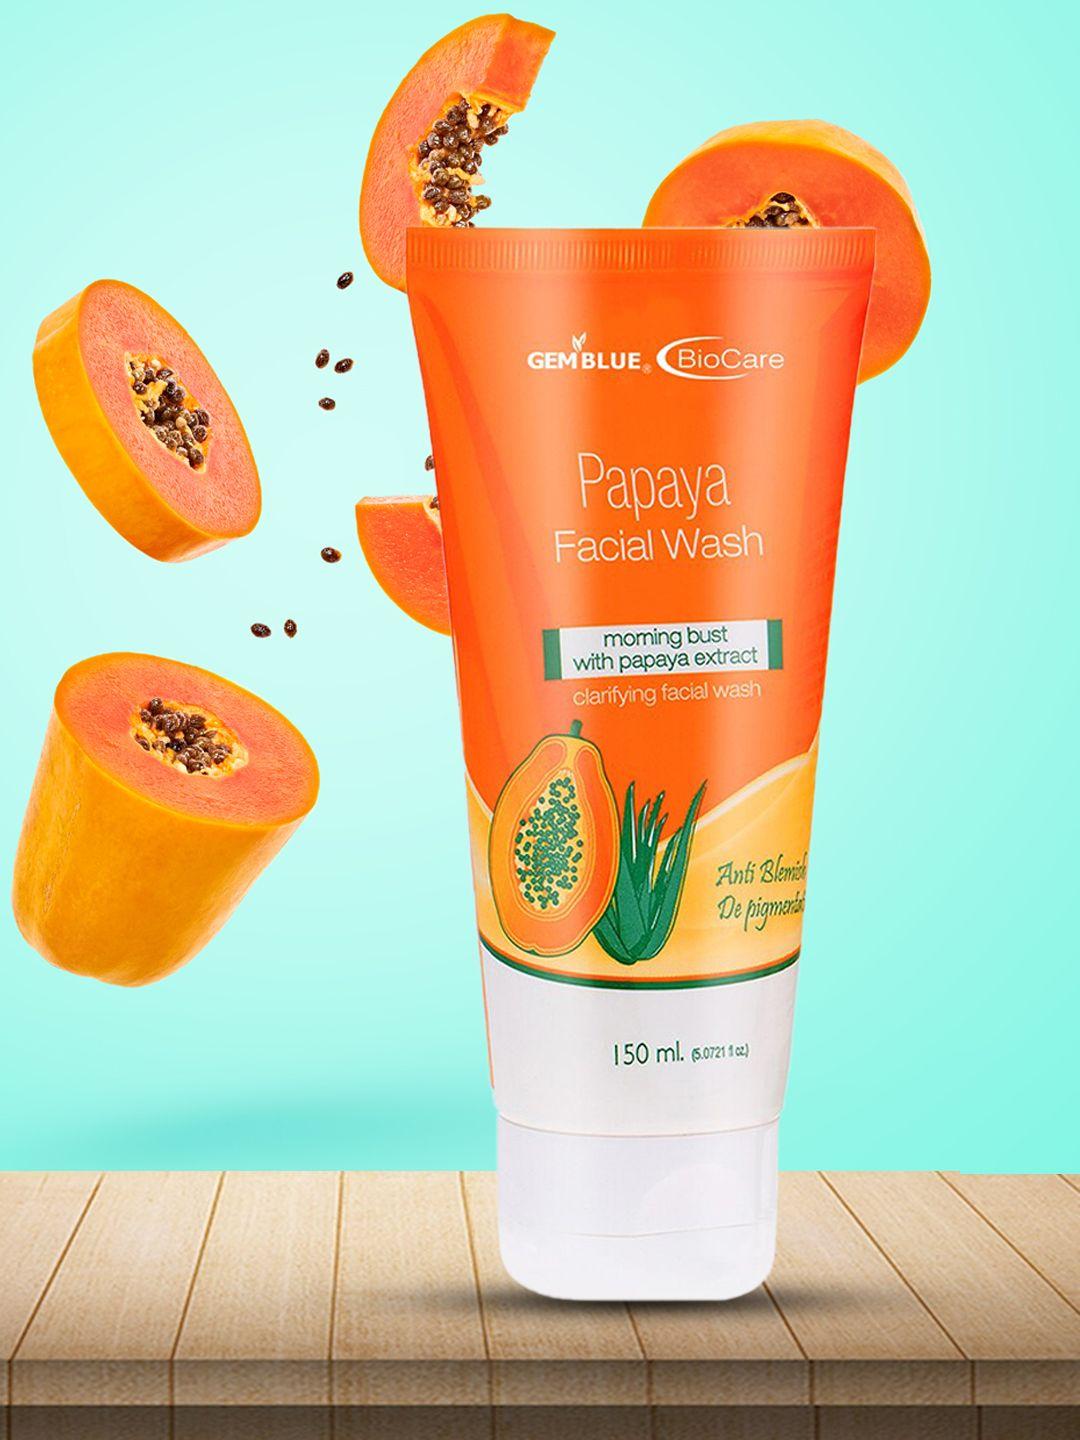 gemblue biocare papaya facial wash